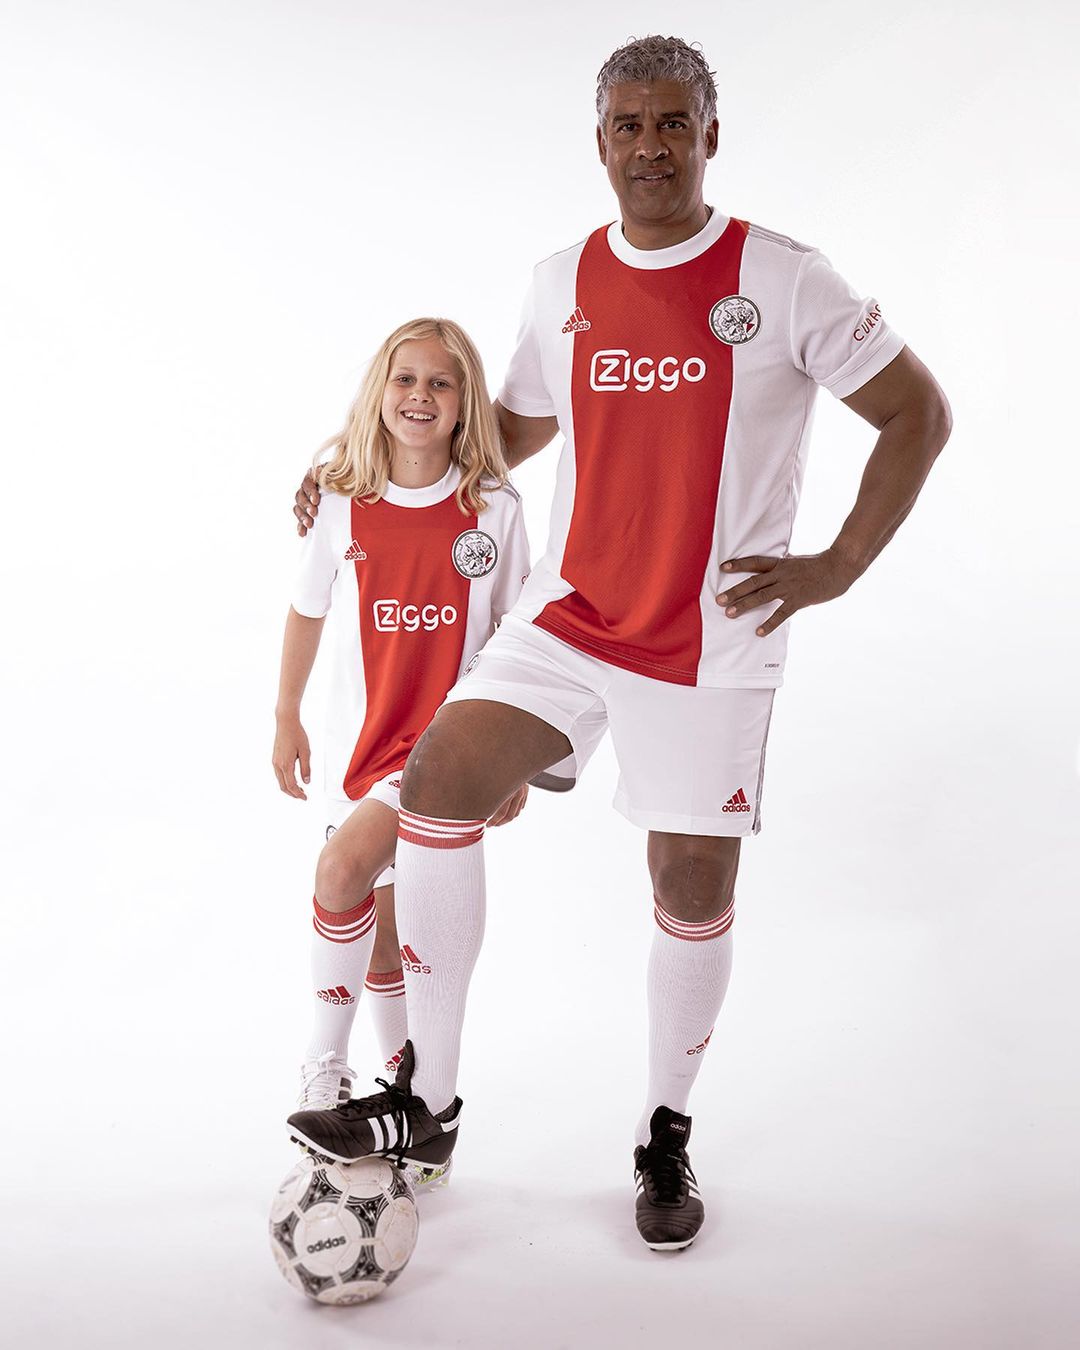 Ajax shirt